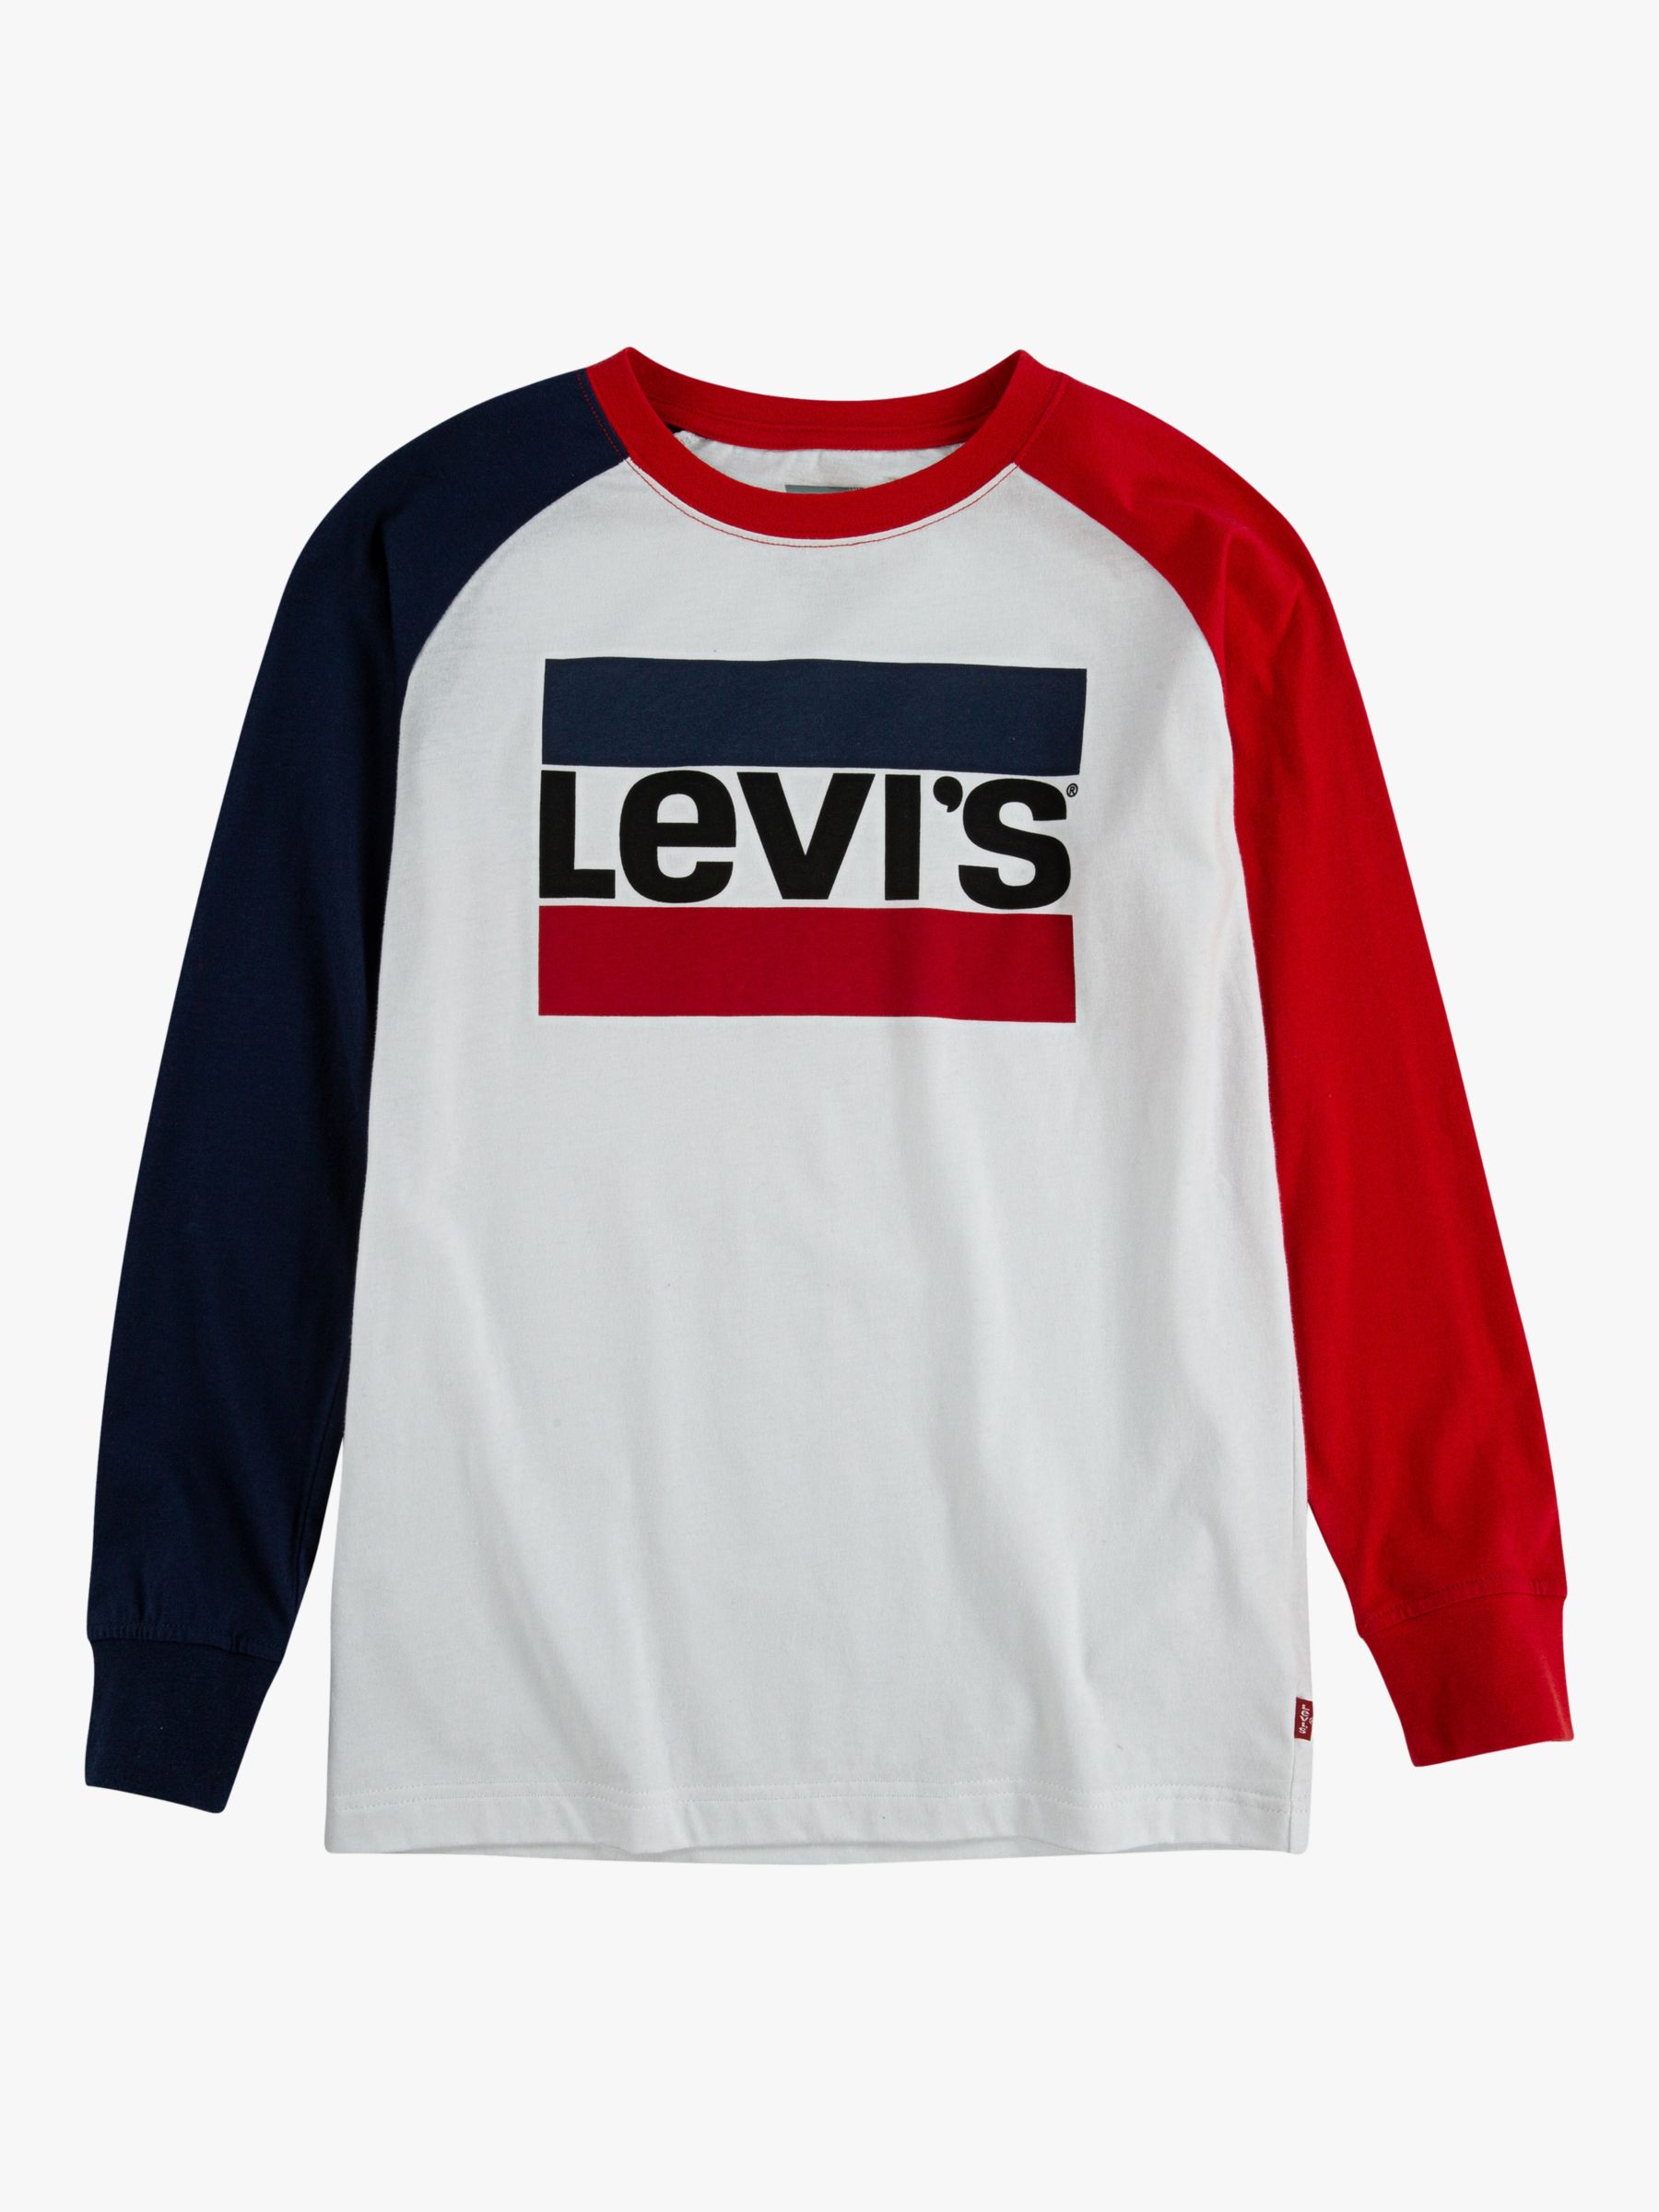 levis t shirt full sleeve